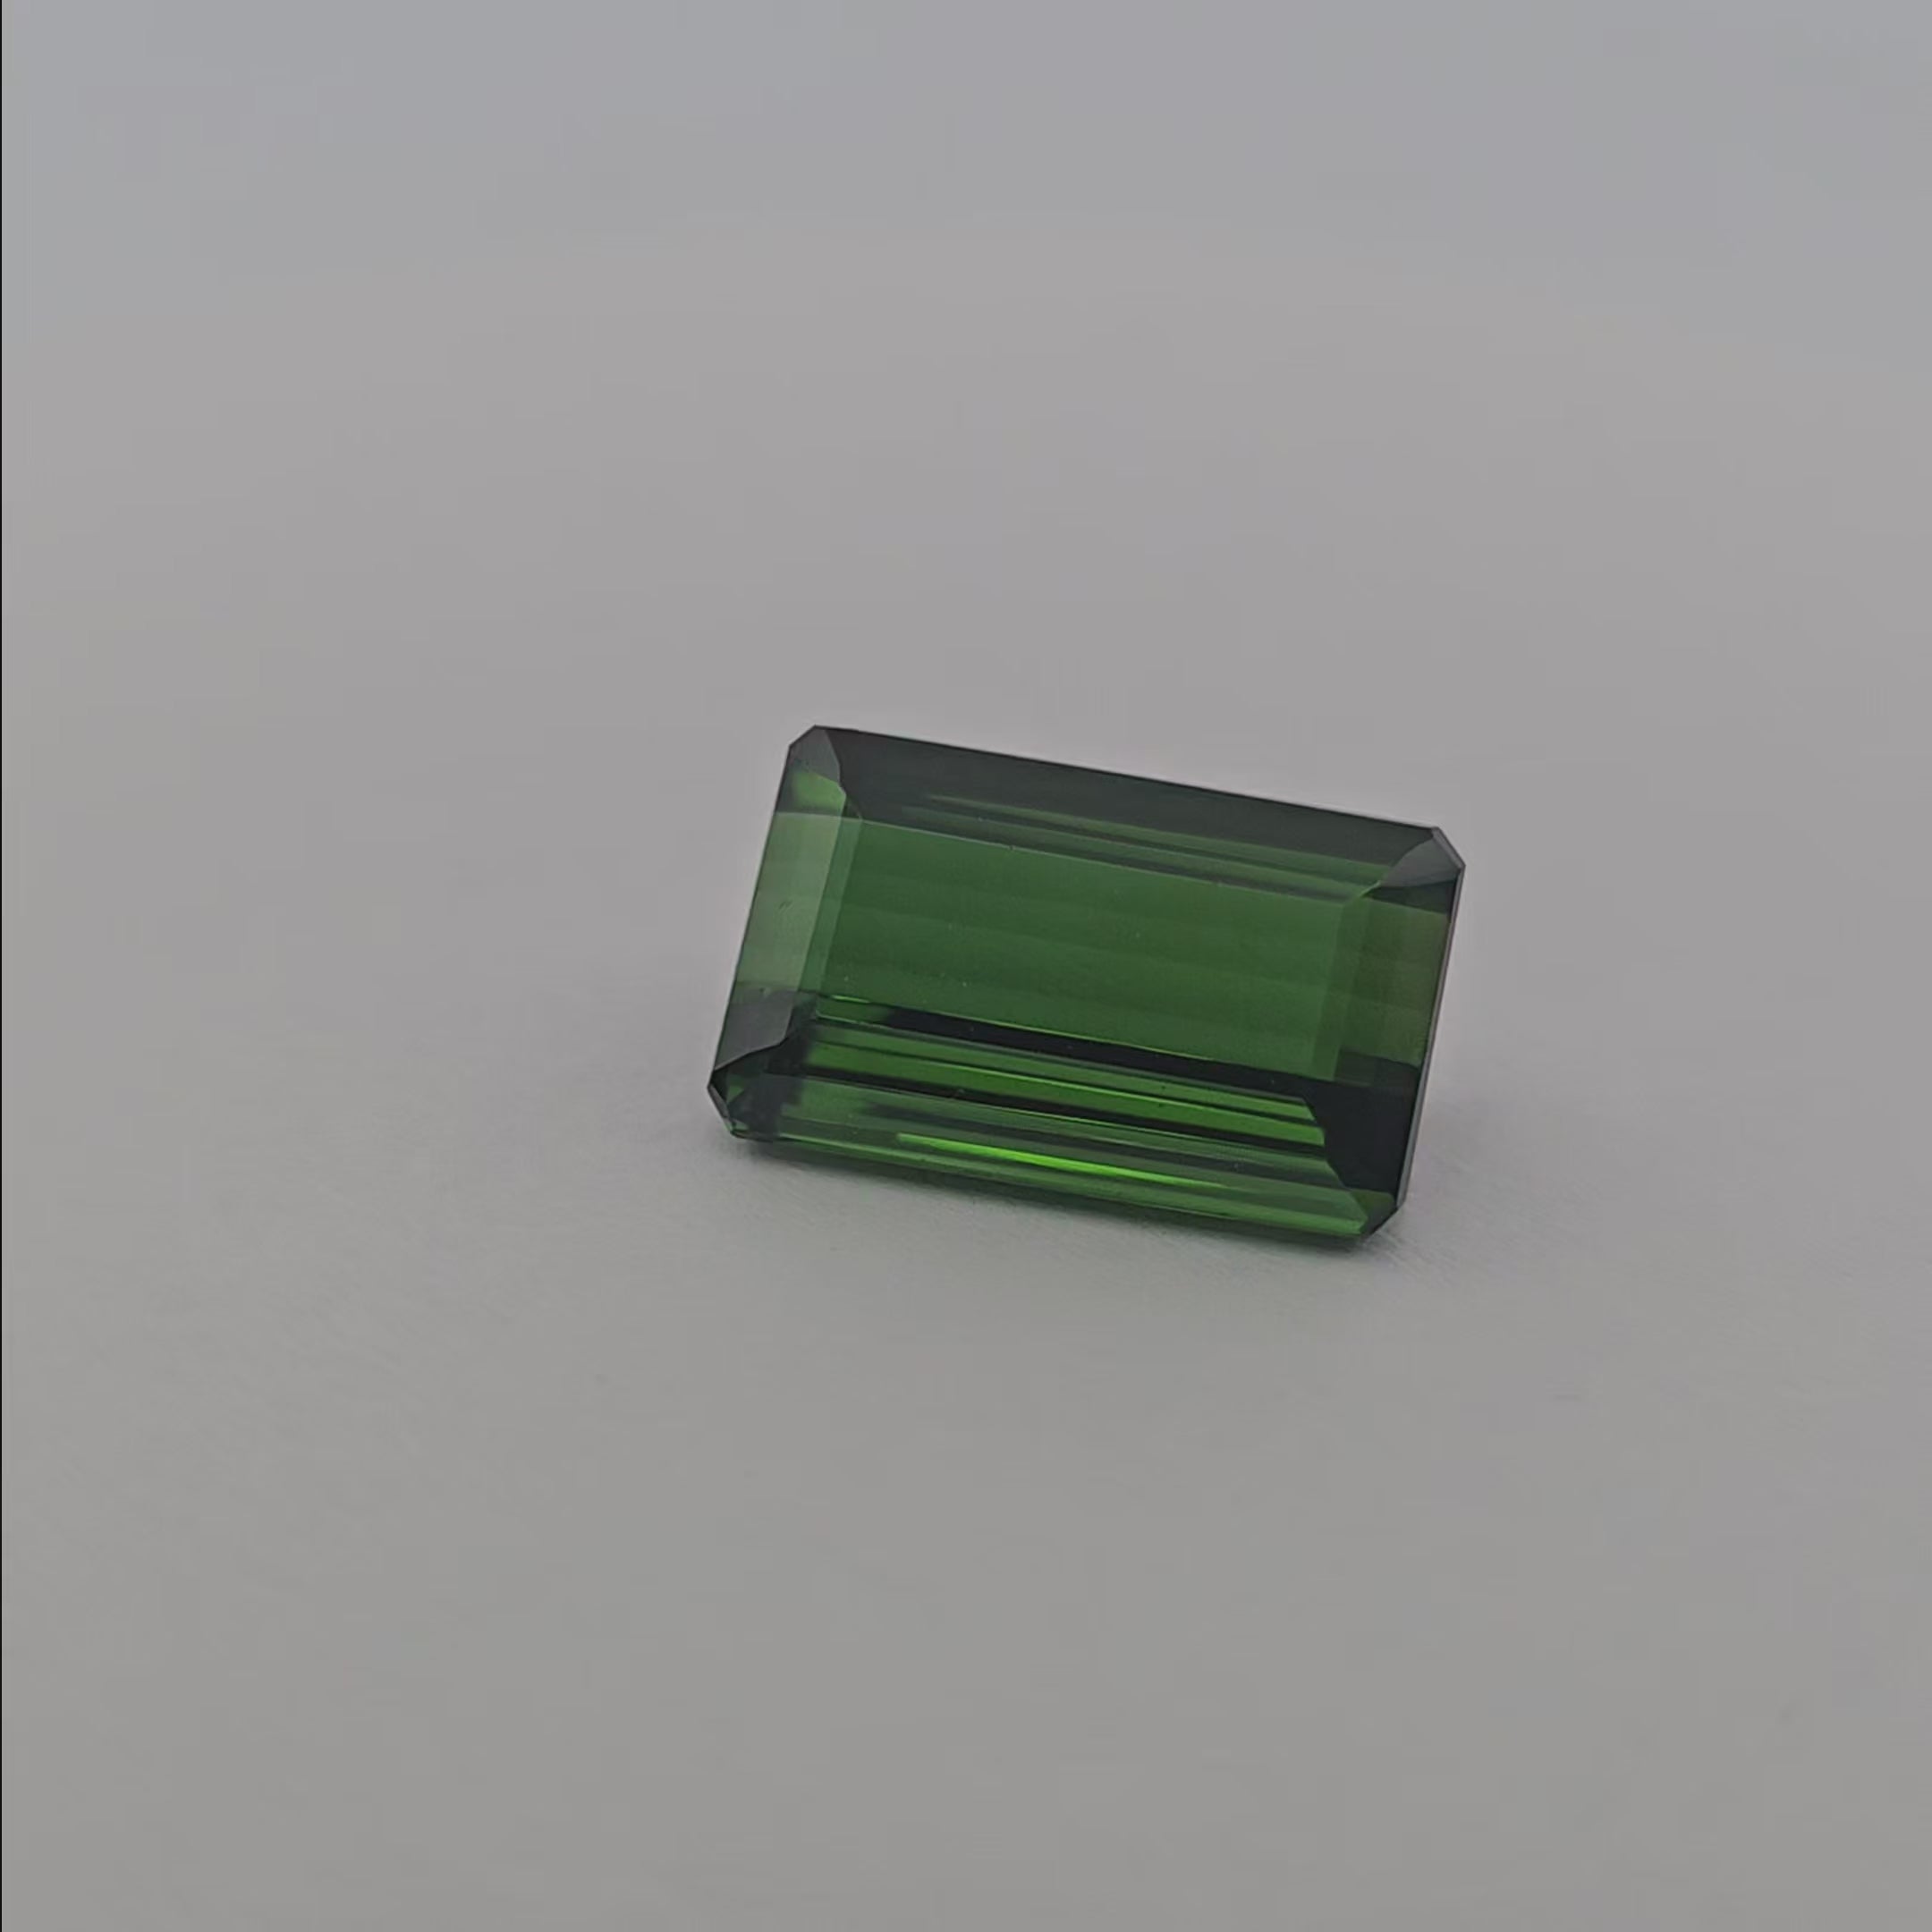 loose Natural Green Tourmaline Stone 7.36 Carats Emerald Cut (14.3 x 8.7 mm)